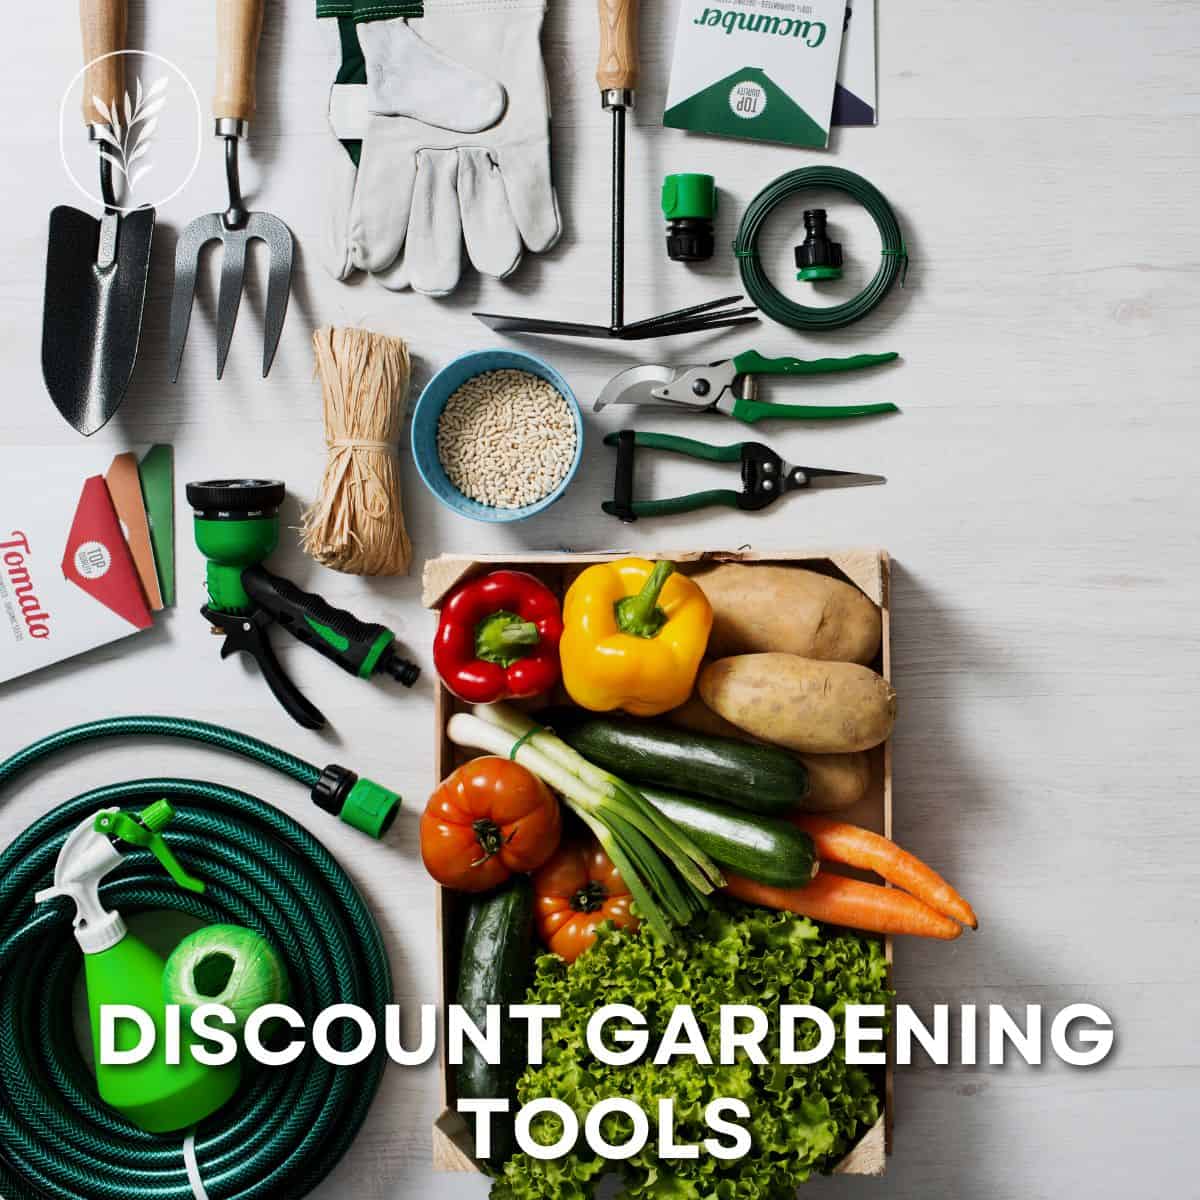 Discount gardening tools via @home4theharvest